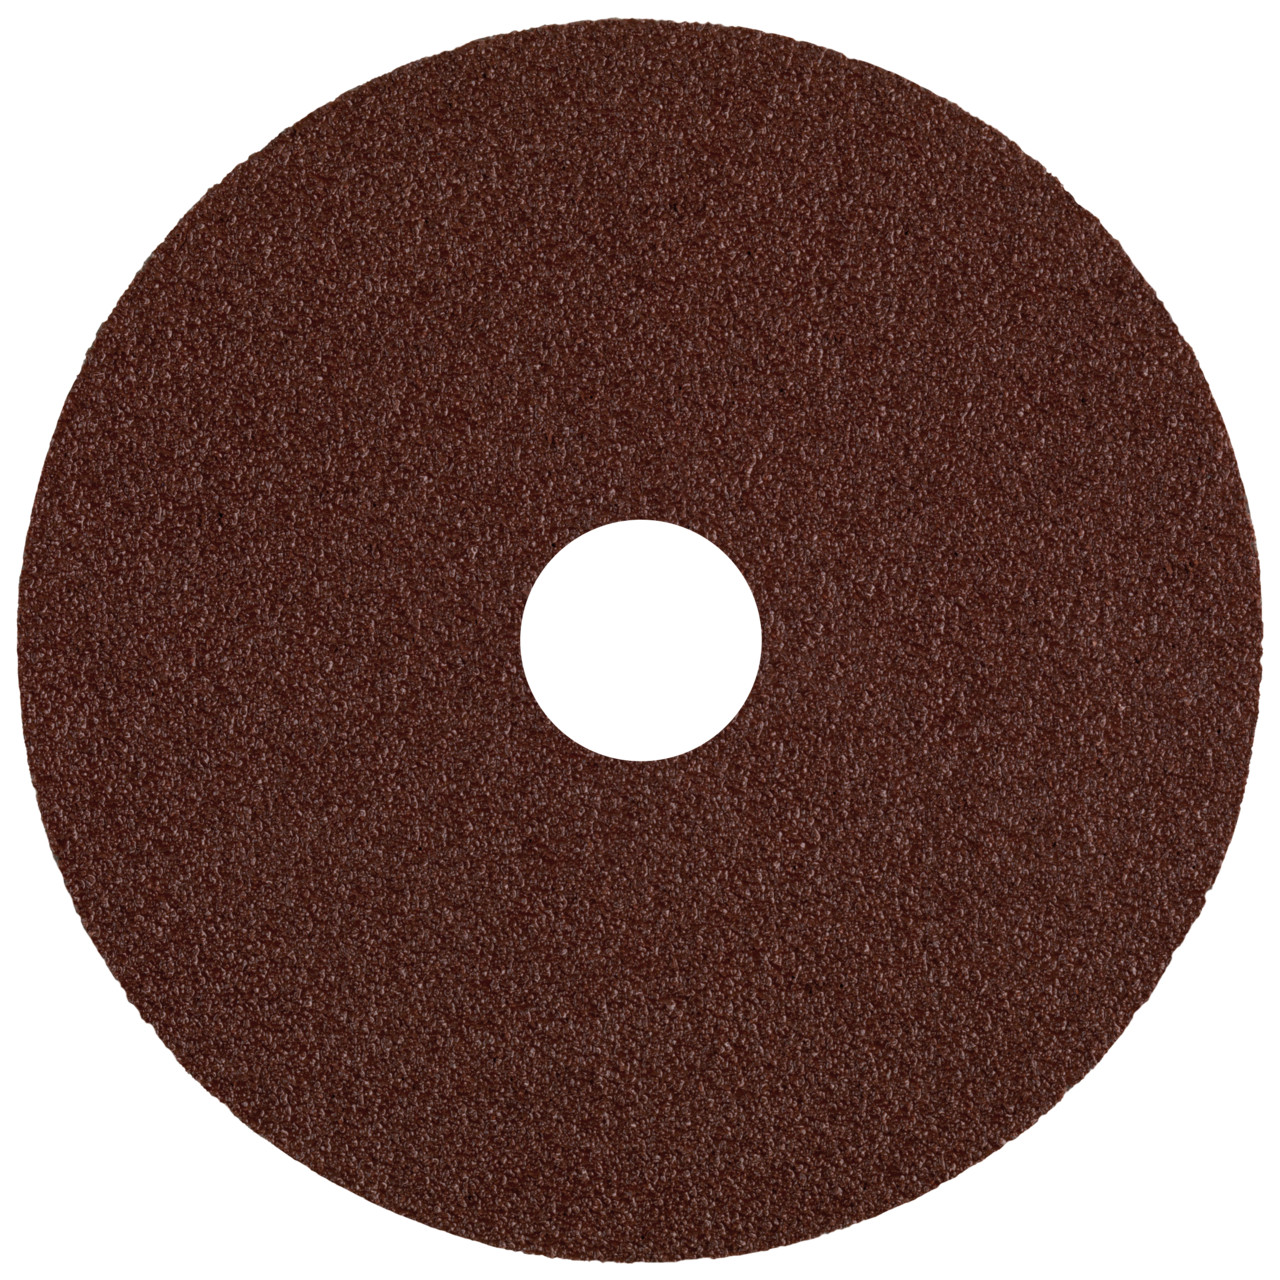 Tyrolit A-B02 V Vulcanised fibre disc DxH 115x22 For steel, non-ferrous metals and wood, P50, shape: DISC, Art. 34286703